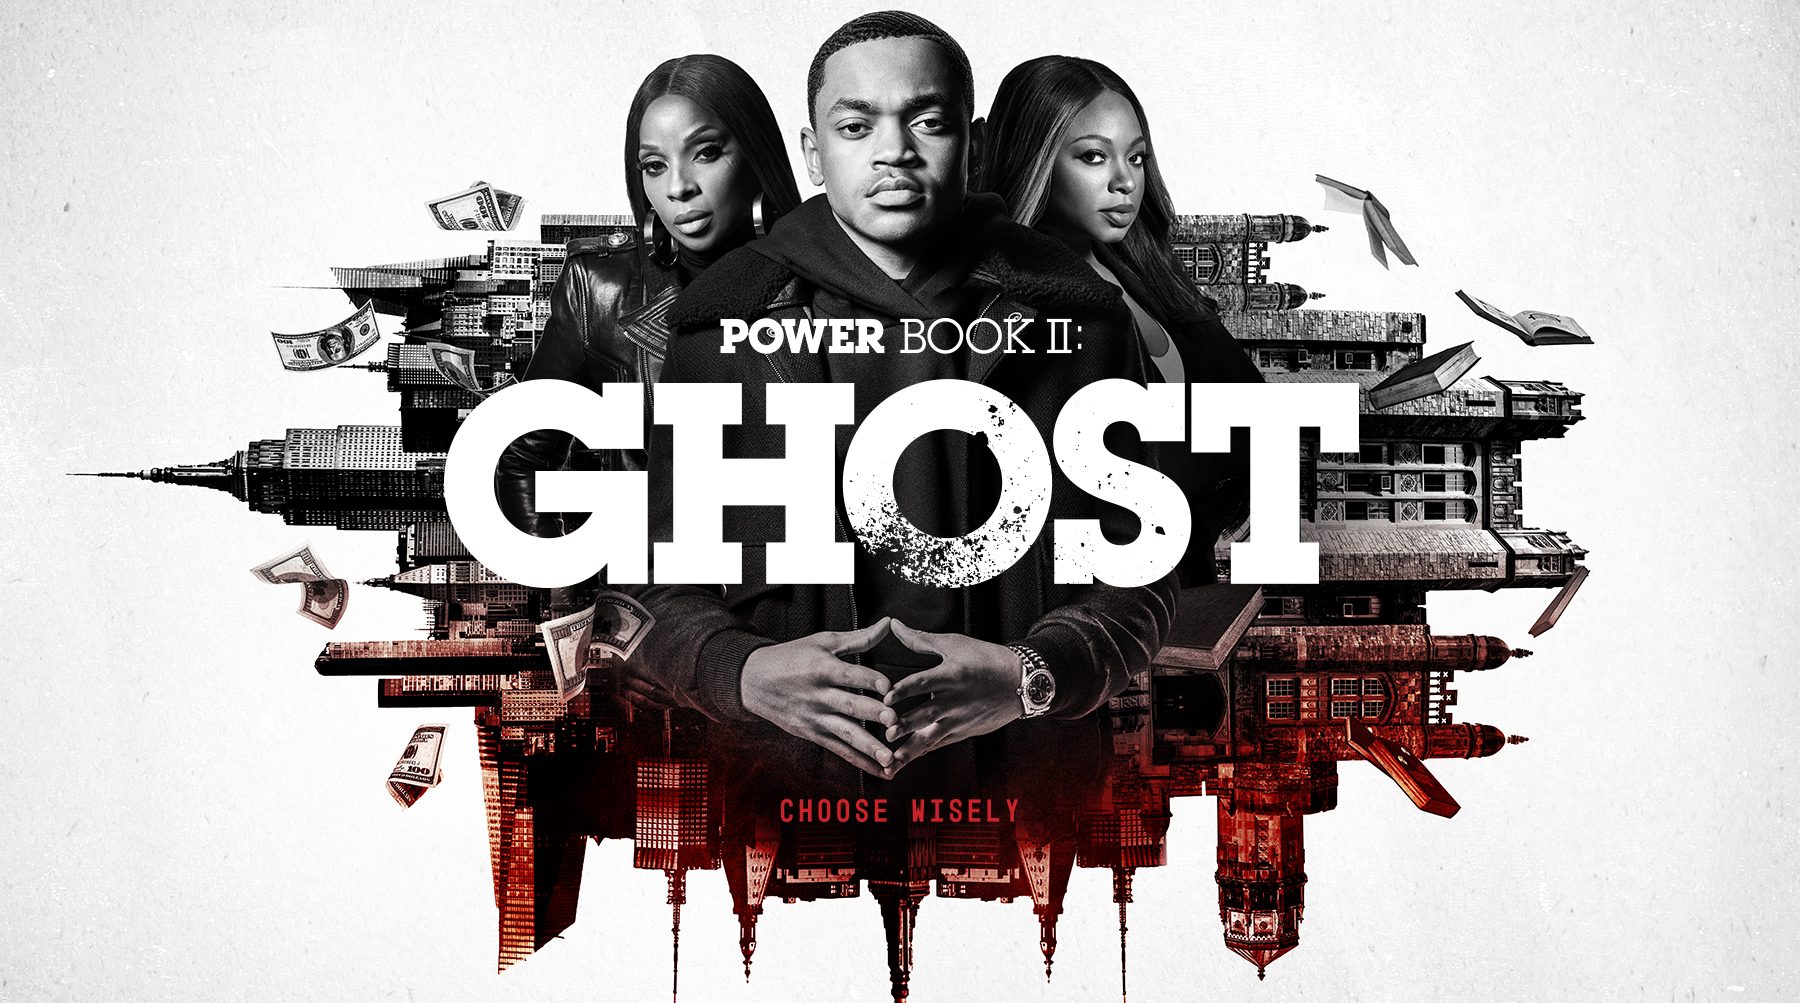 Exclusive: Woody McClain talks Power Book II: Ghost Season 3